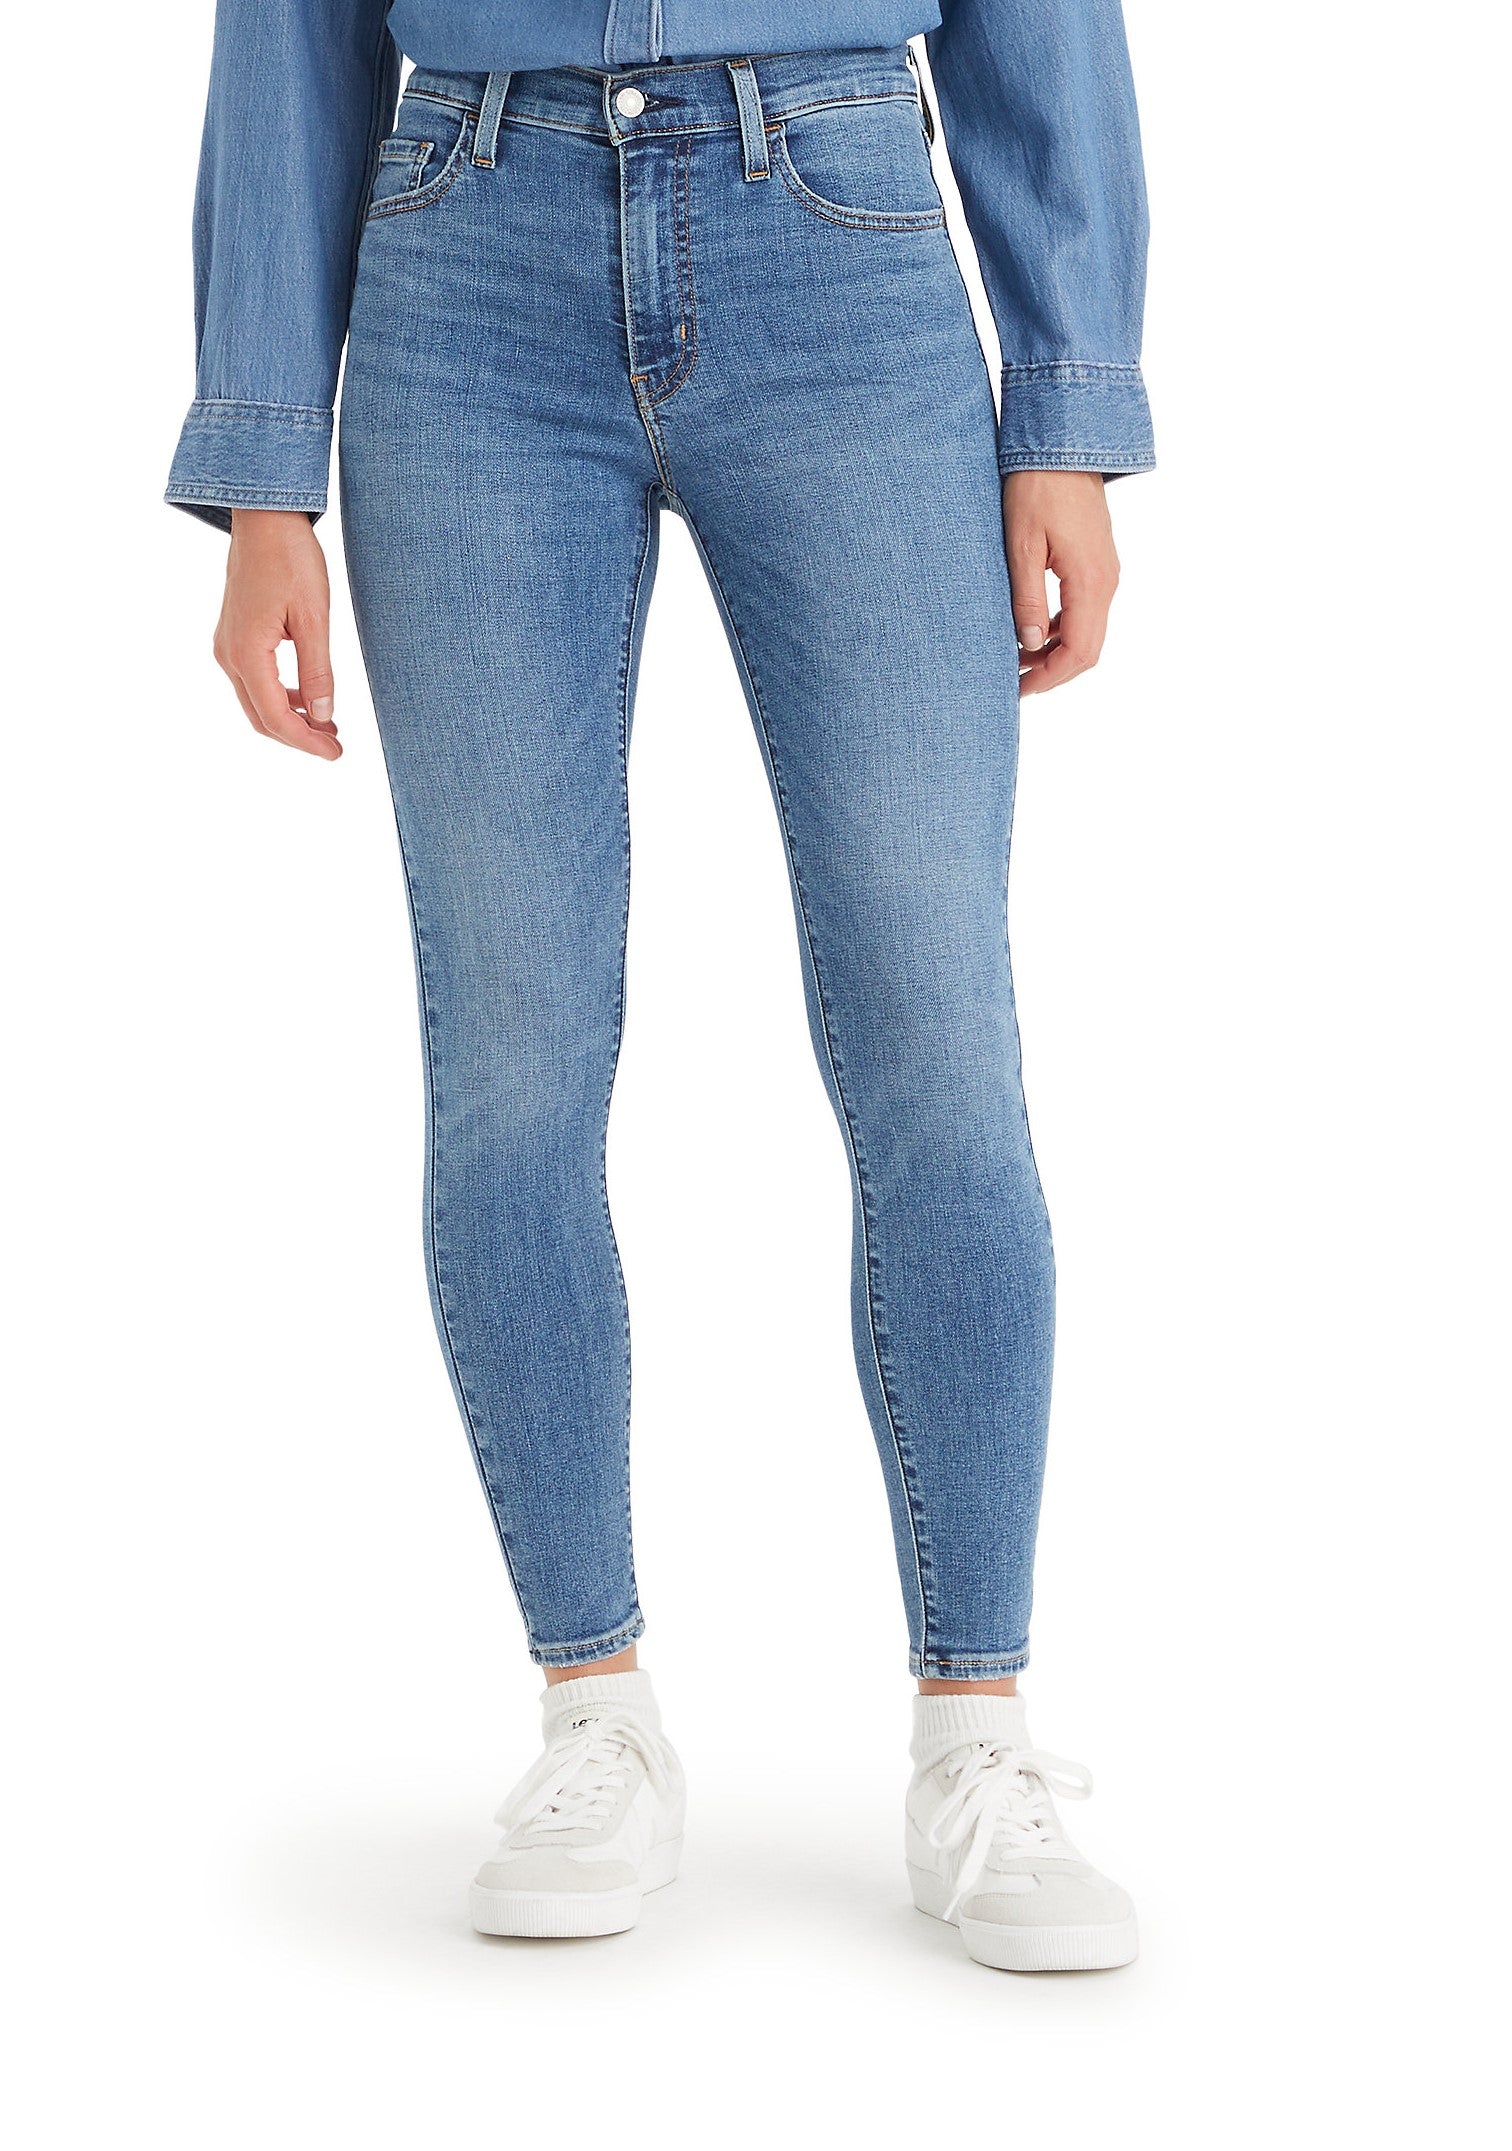 pantalones-jeans-levis-720-skinny-p-damas-1